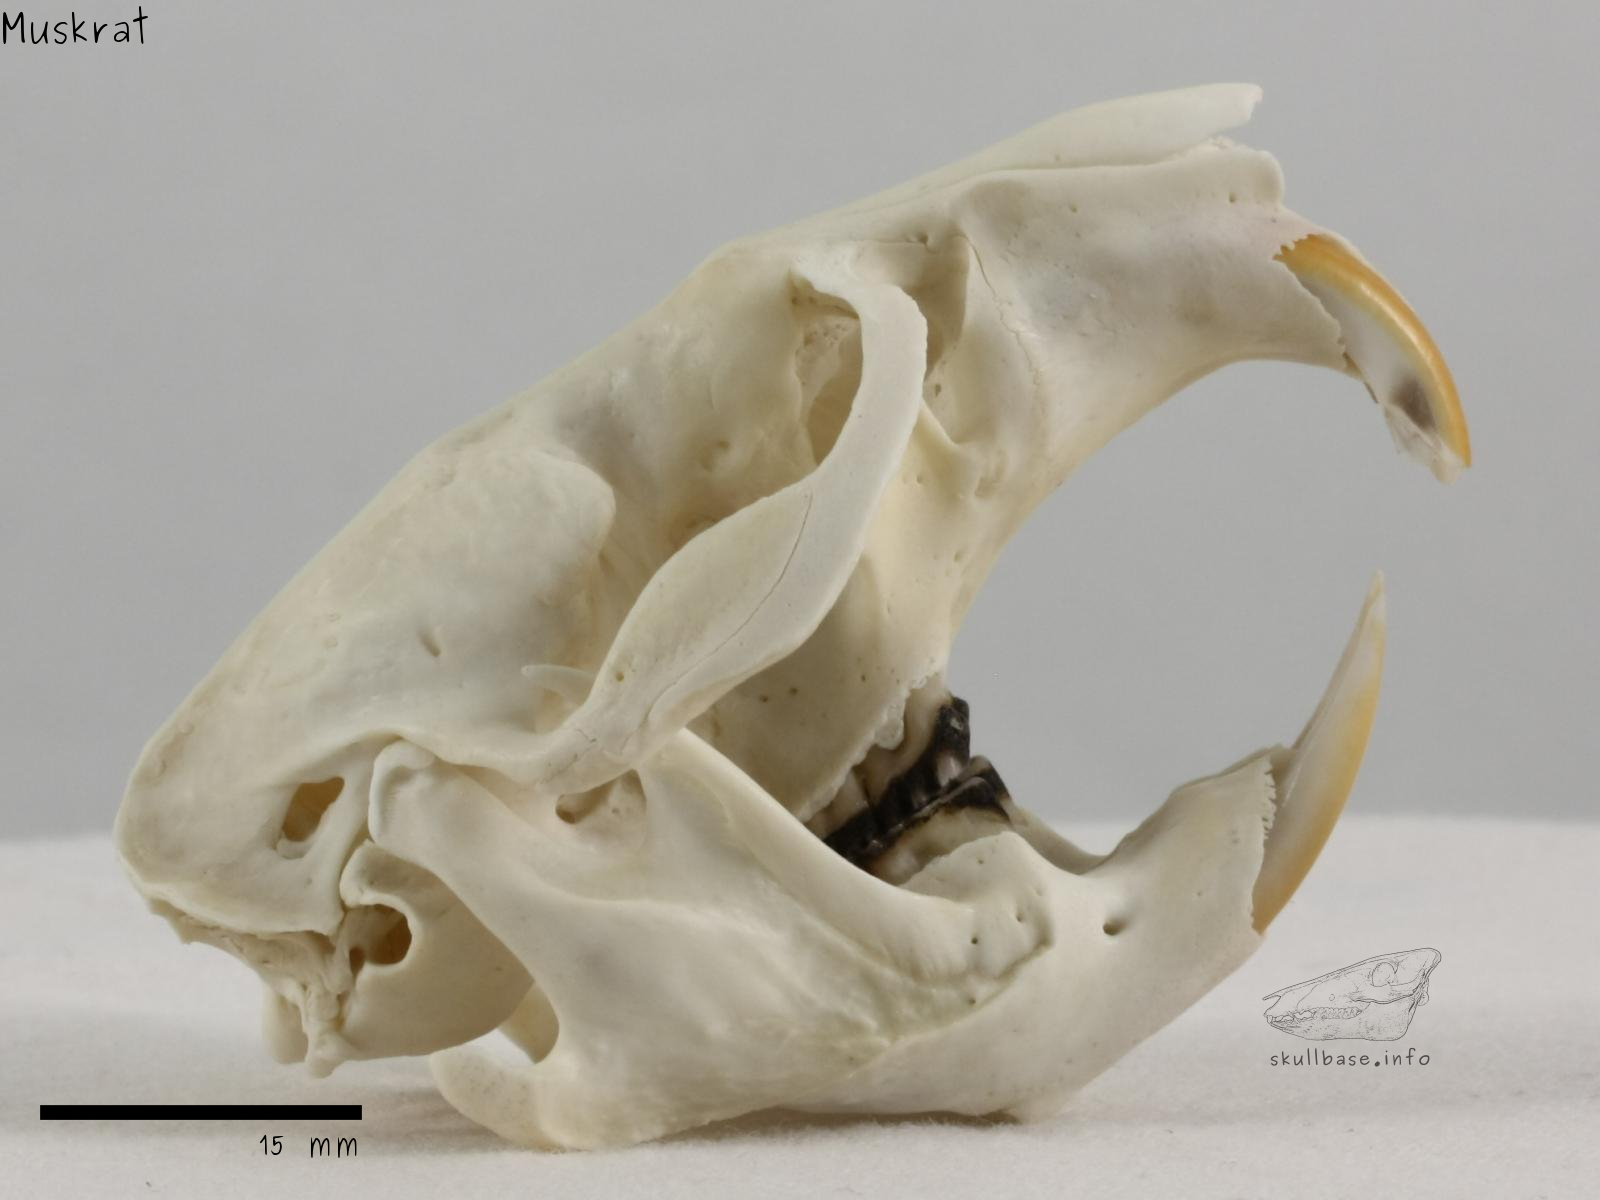 Muskrat (Ondatra zibethicus) skull lateral view